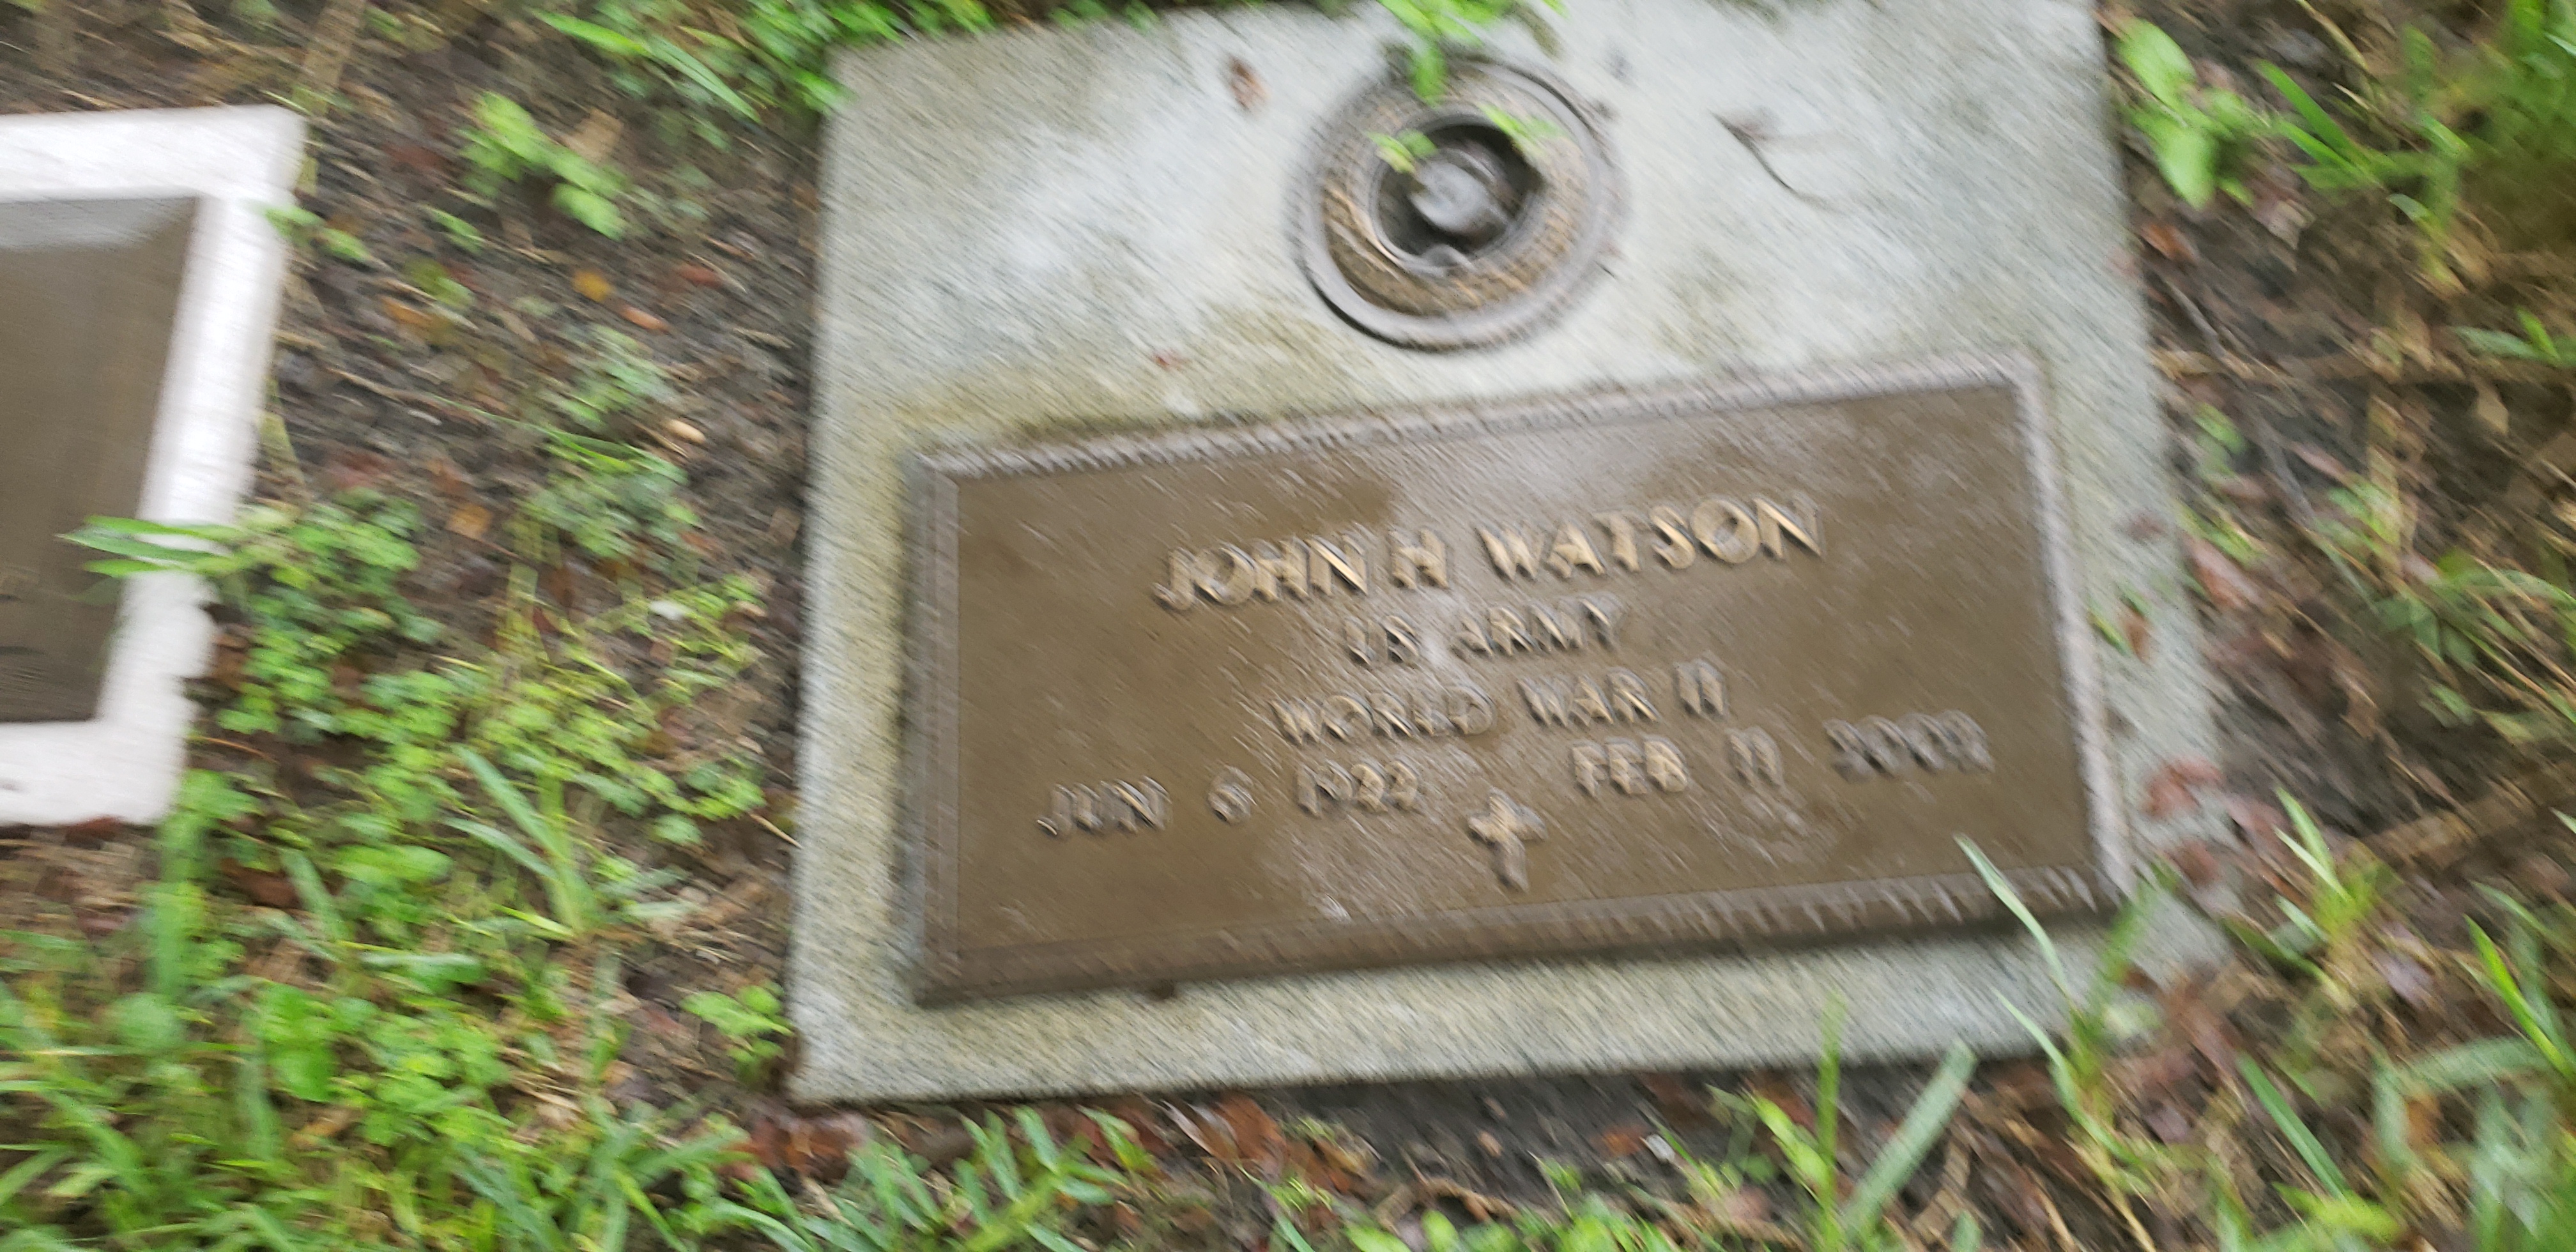 John H Watson